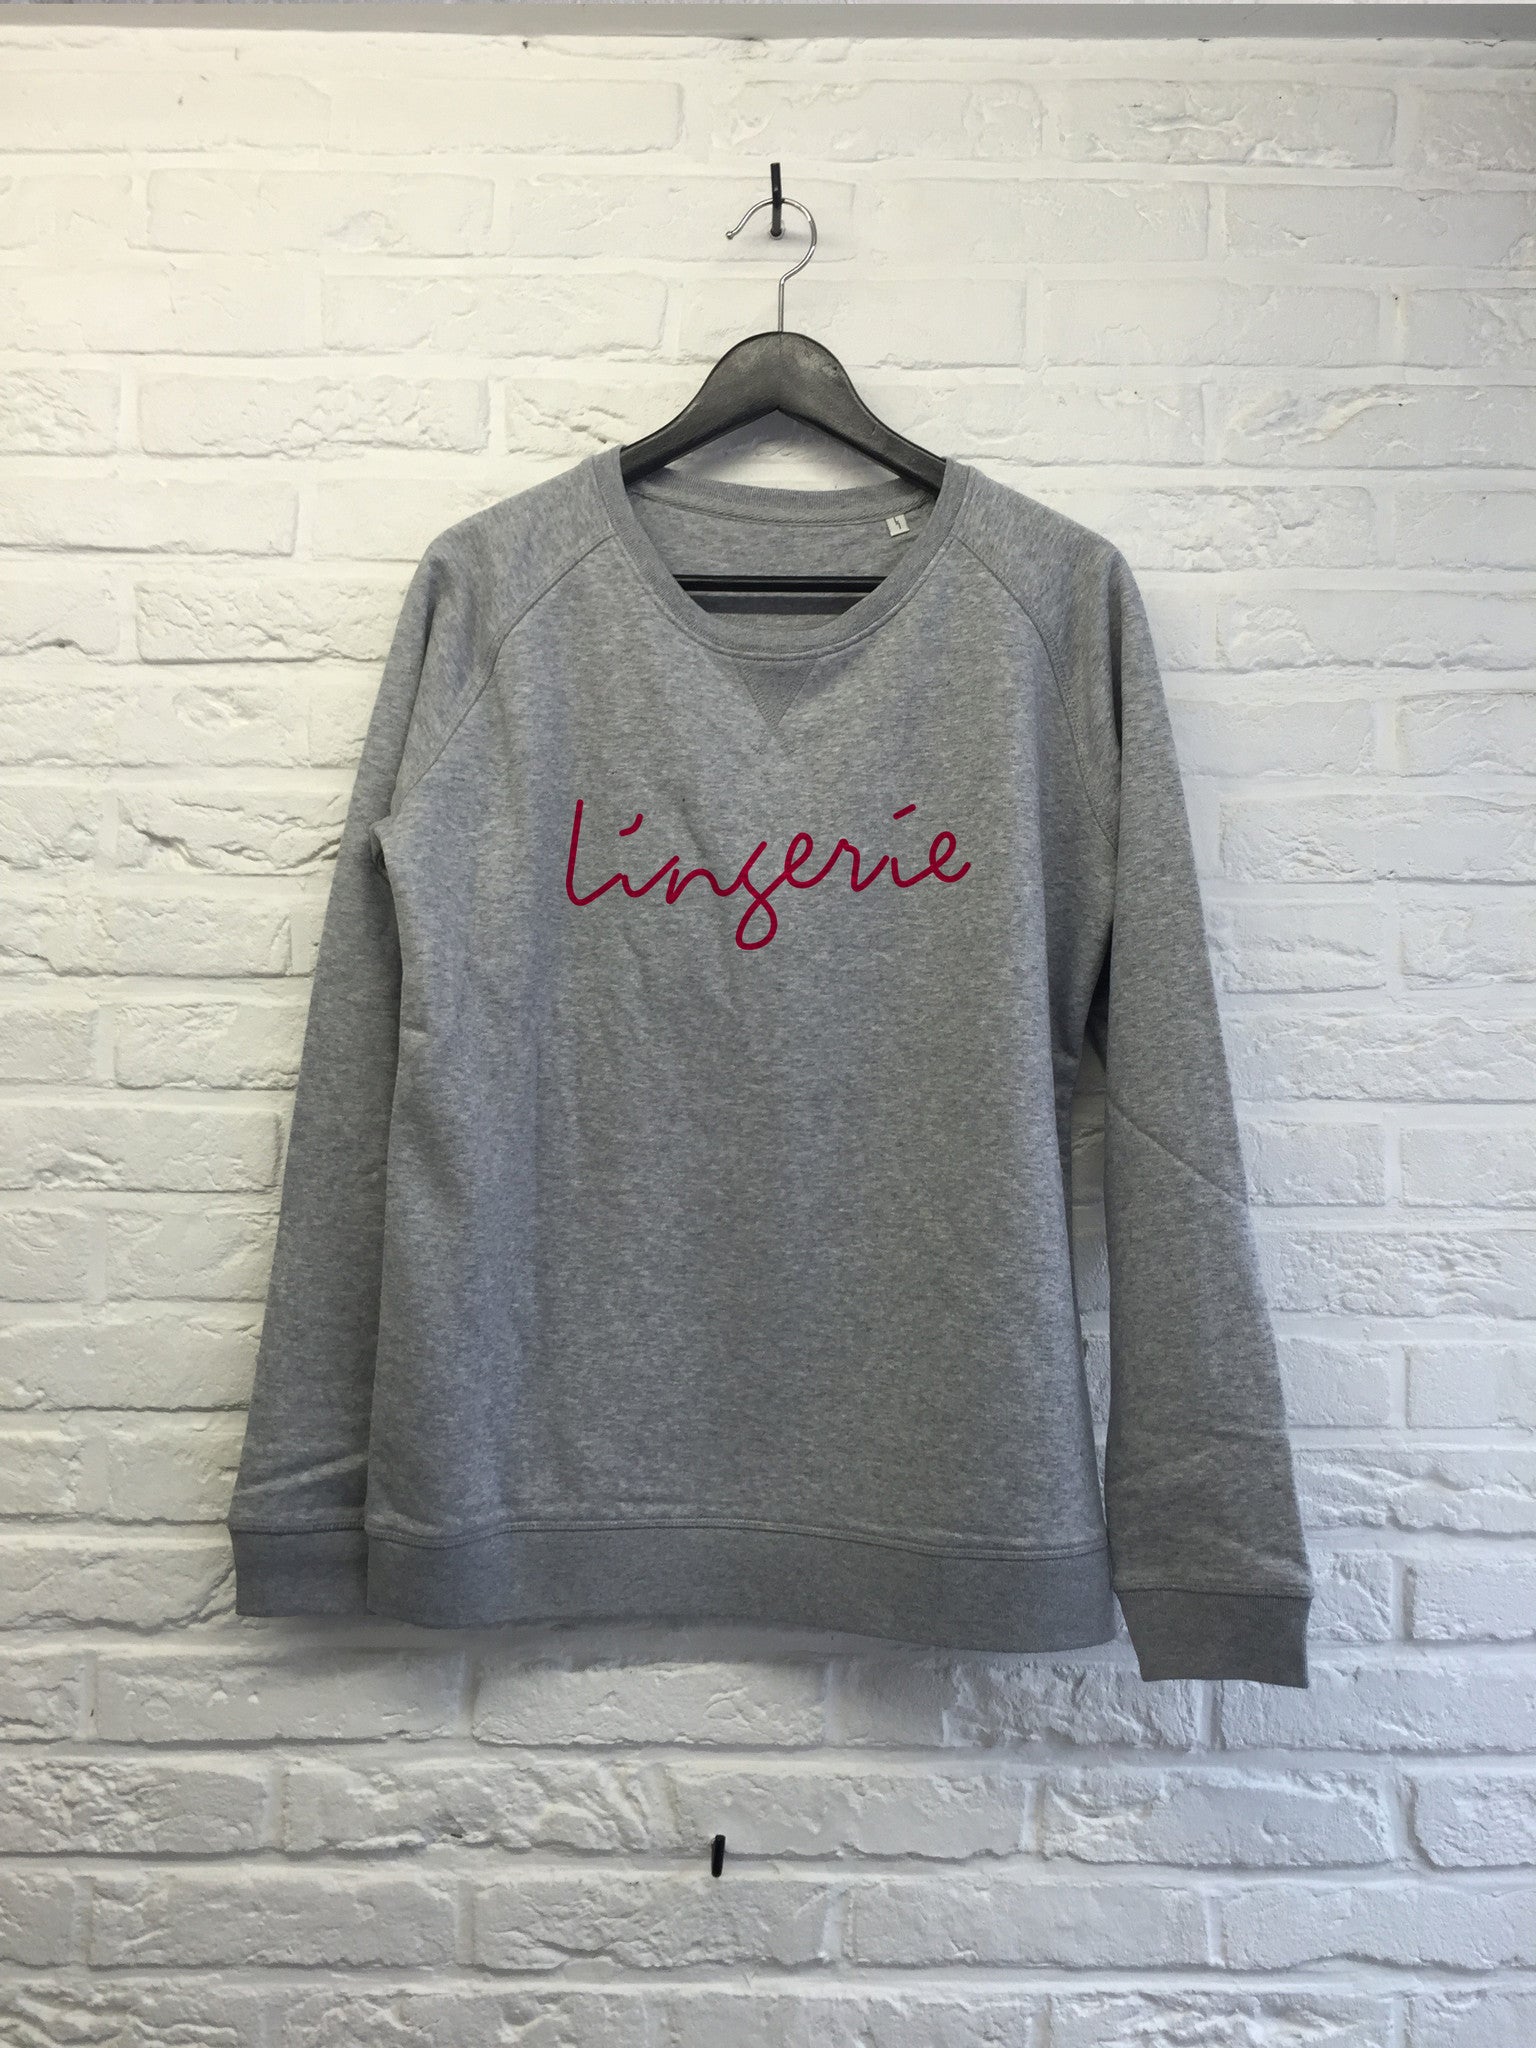 Lingerie - Sweat Femme-Sweat shirts-Atelier Amelot